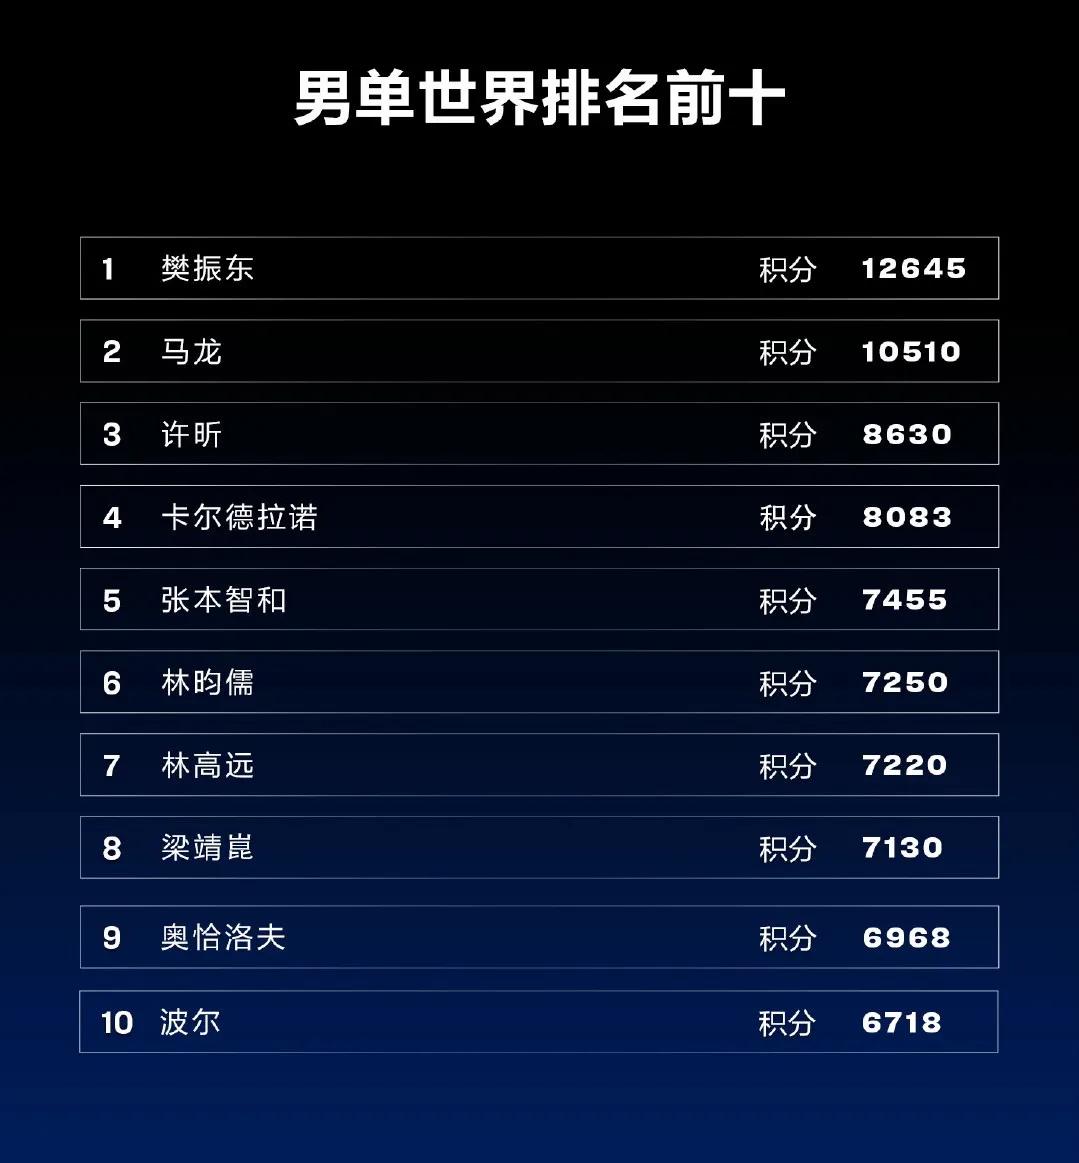 Chen long world ranking